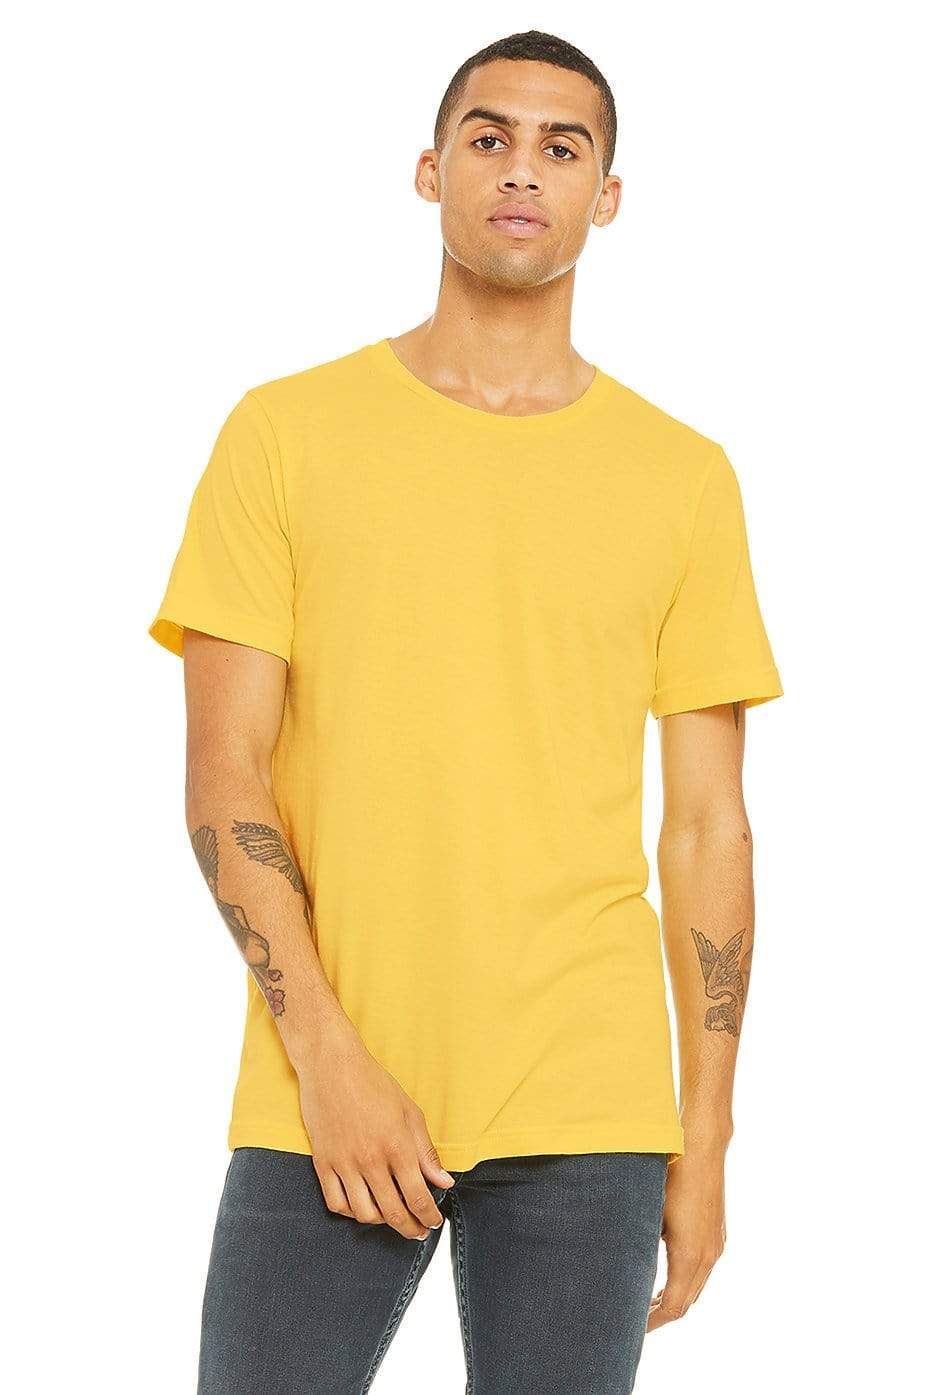 Grooveman Music T Shirt XS / Yellow Jersey Short Sleeve Tee